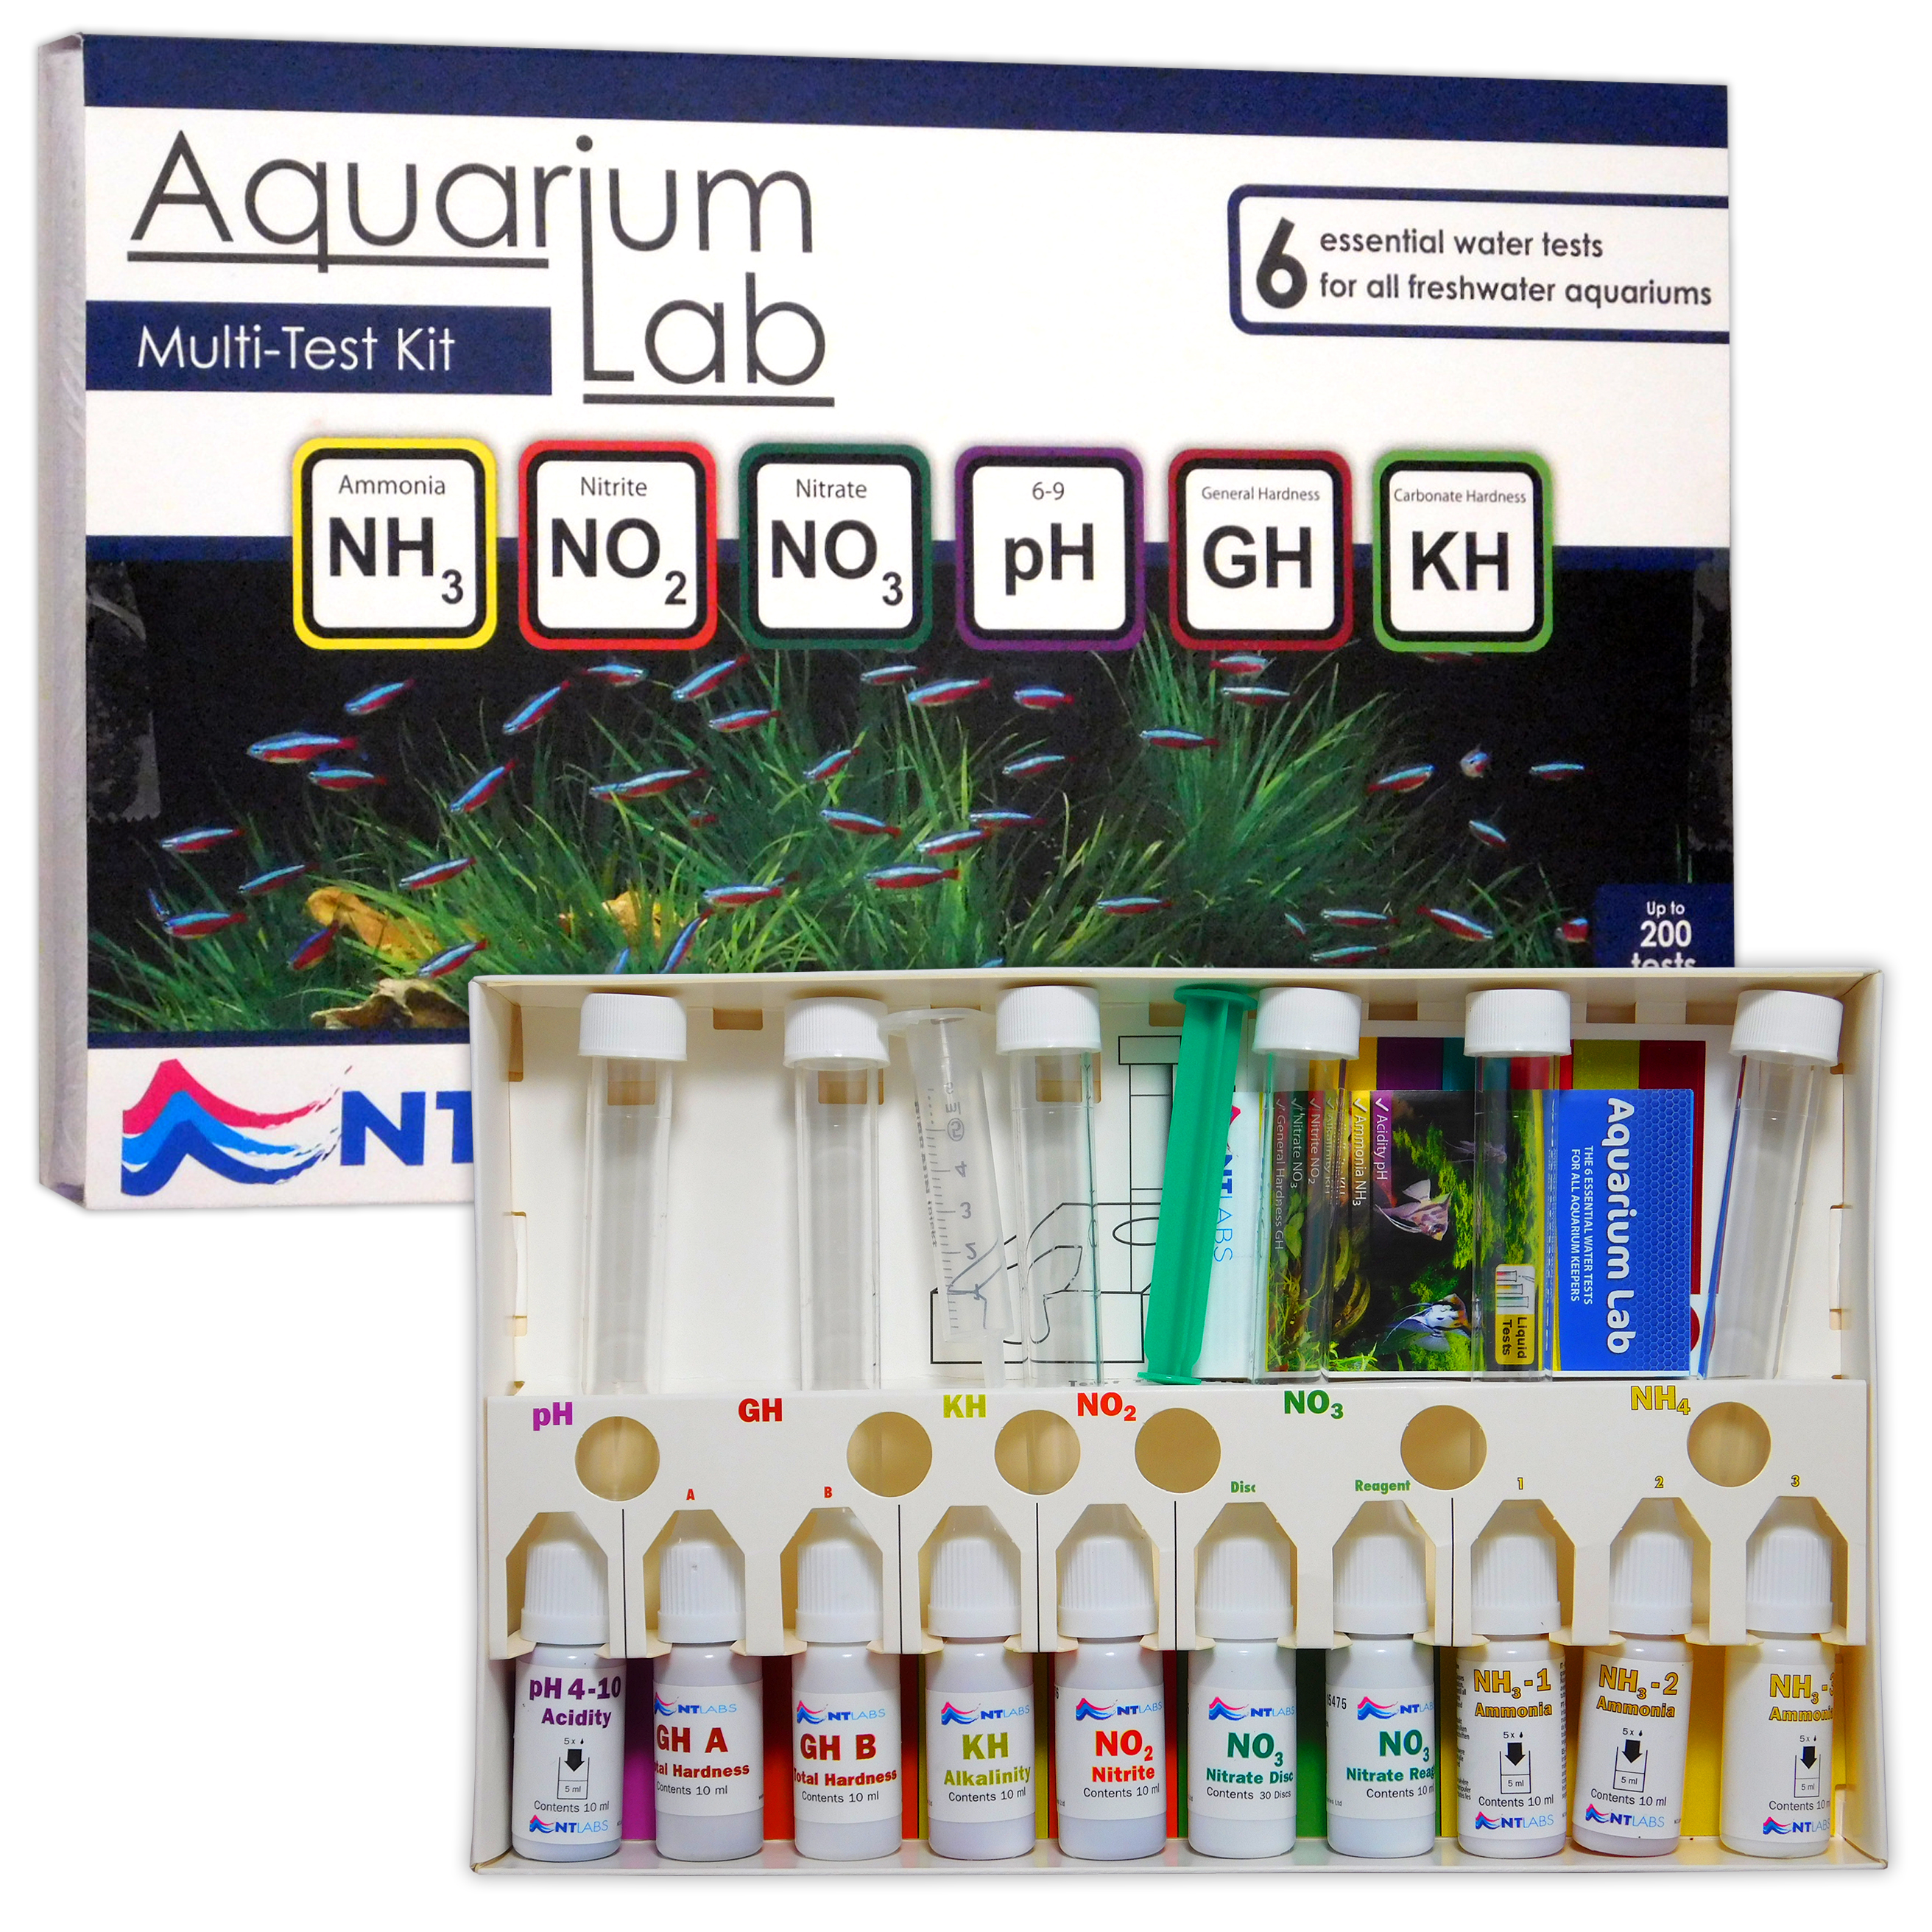 nt labs aquarium test kit